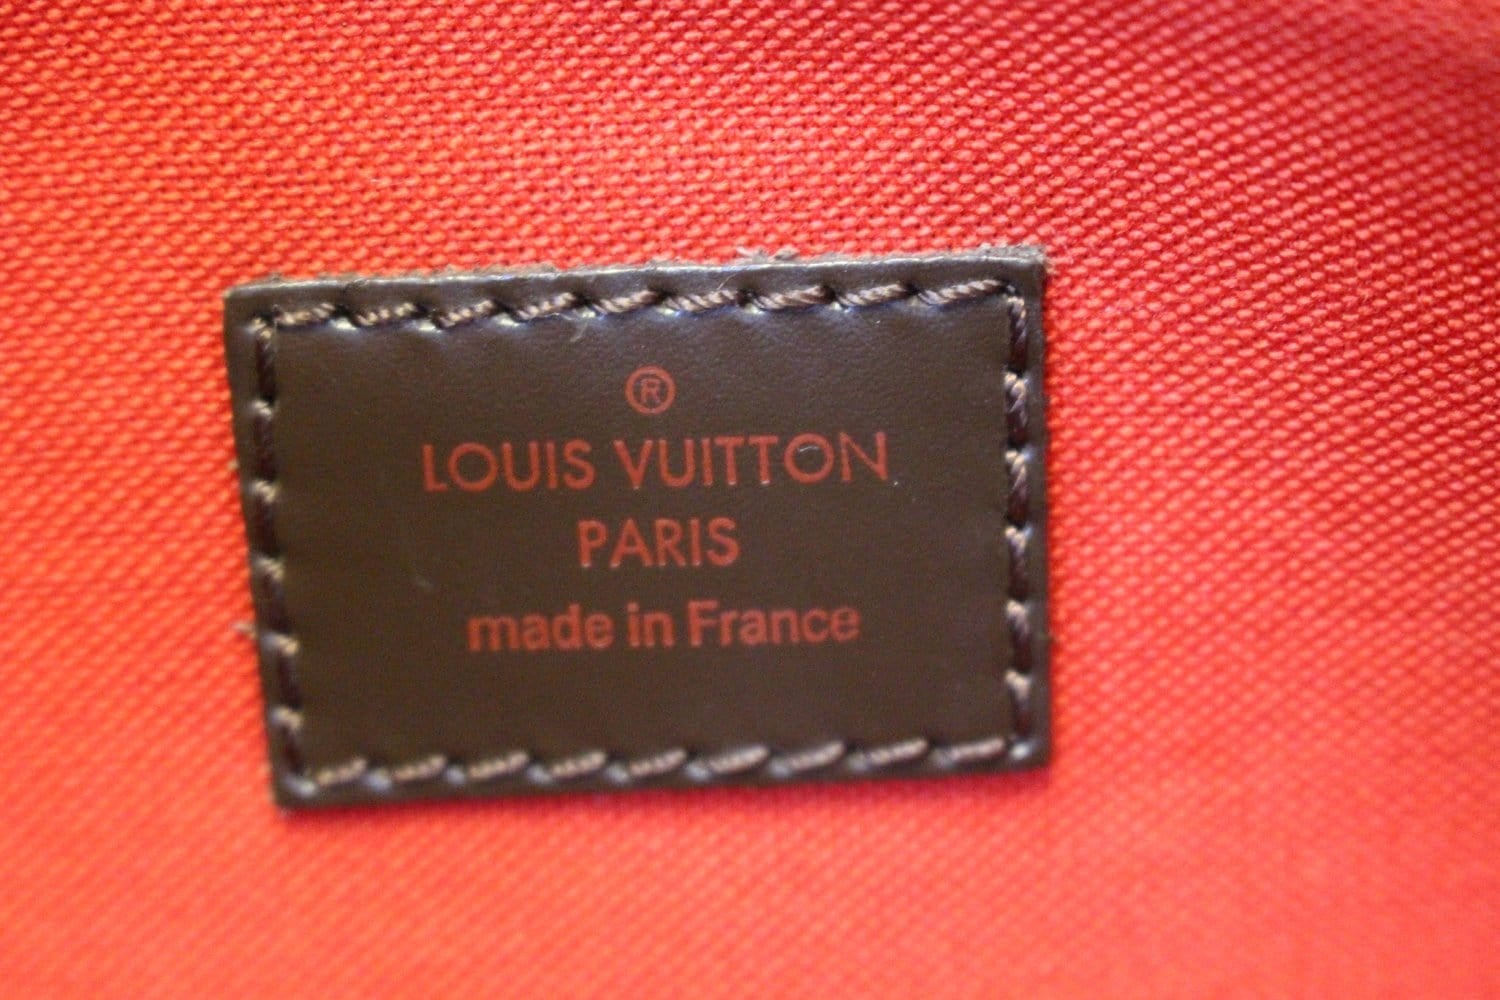 Louis Vuitton Damier Ebene Bloomsbury PM Crossbody 860174